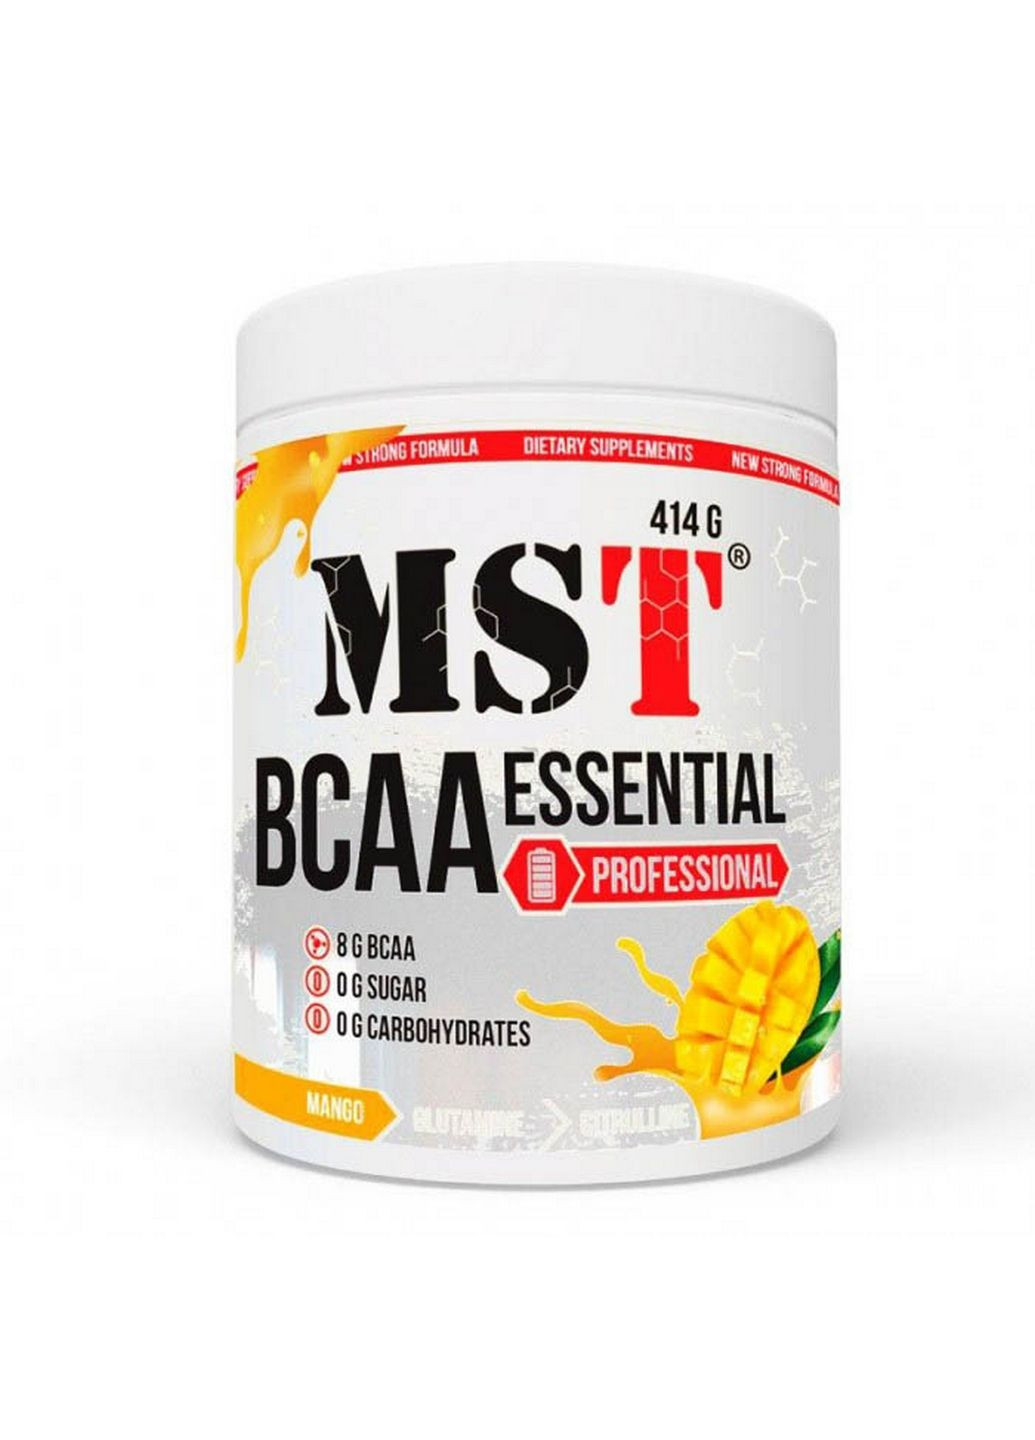 Аминокислота BCAA BCAA Essential Professional, 414 грамм Манго MST (293482015)